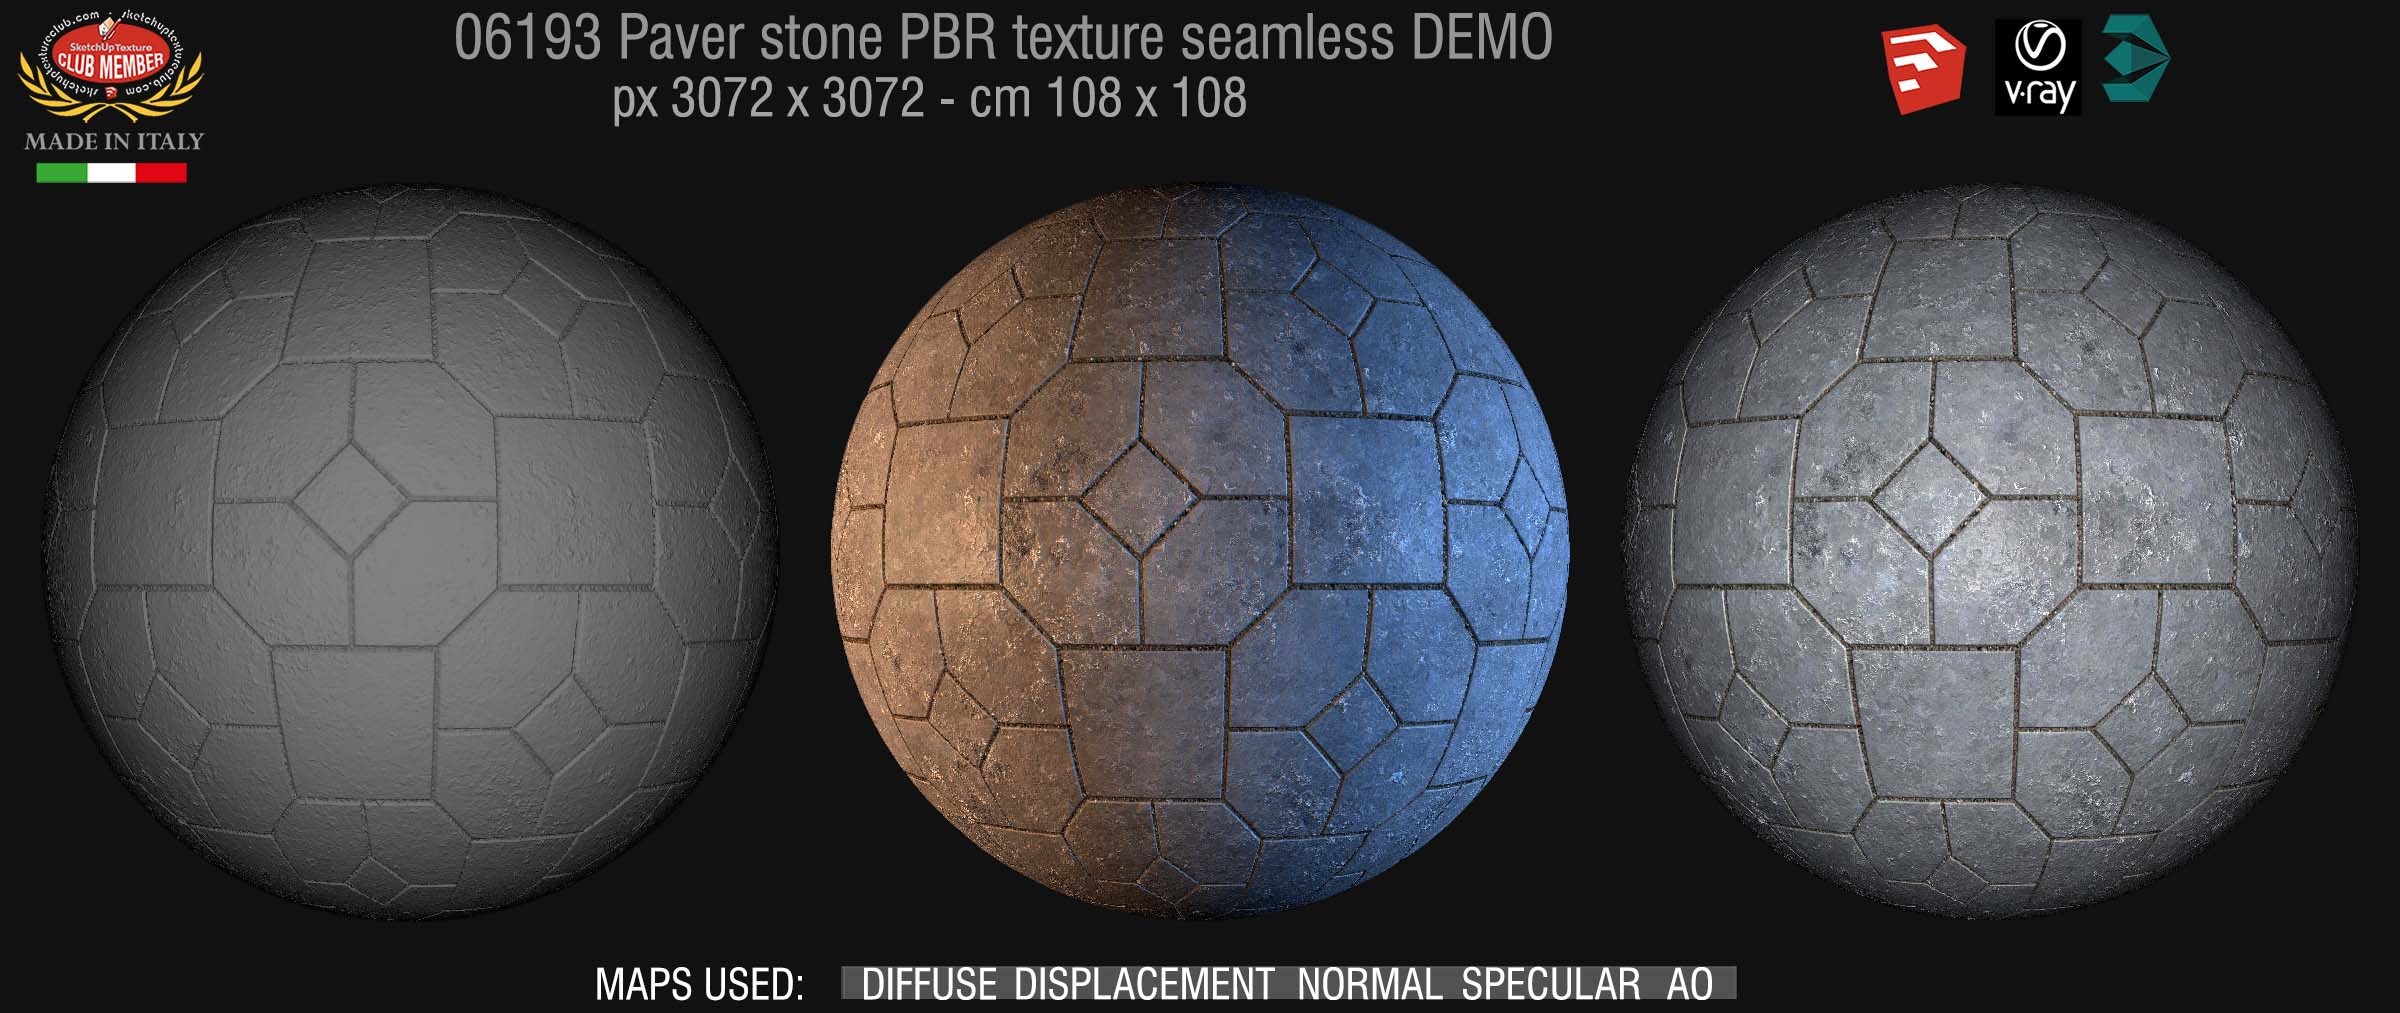 06193 Pavers stone PBR texture seamless DEMO